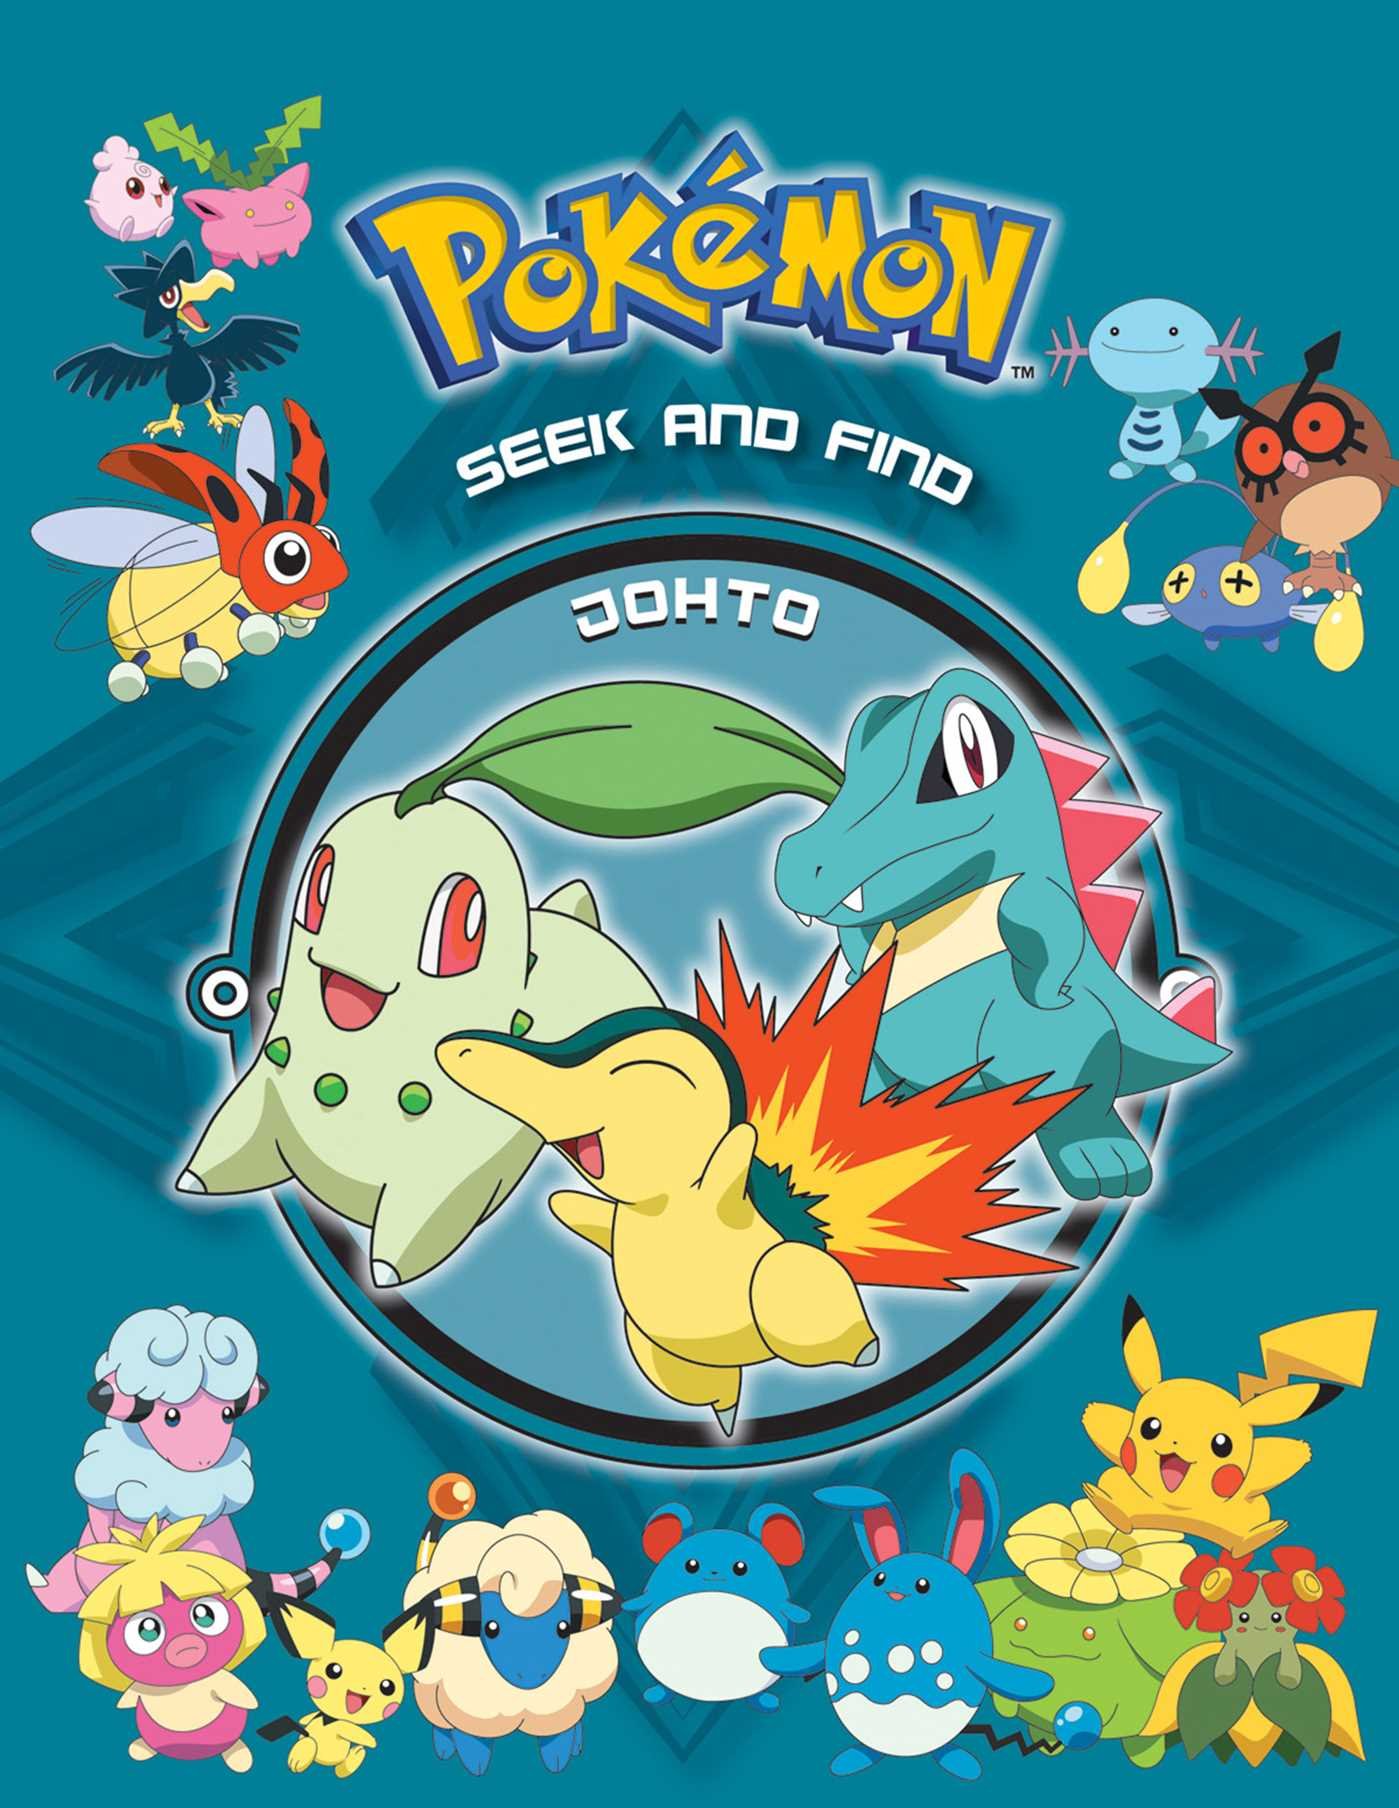 Pokémon Seek and Find - Johto: Joht (Pokemon)